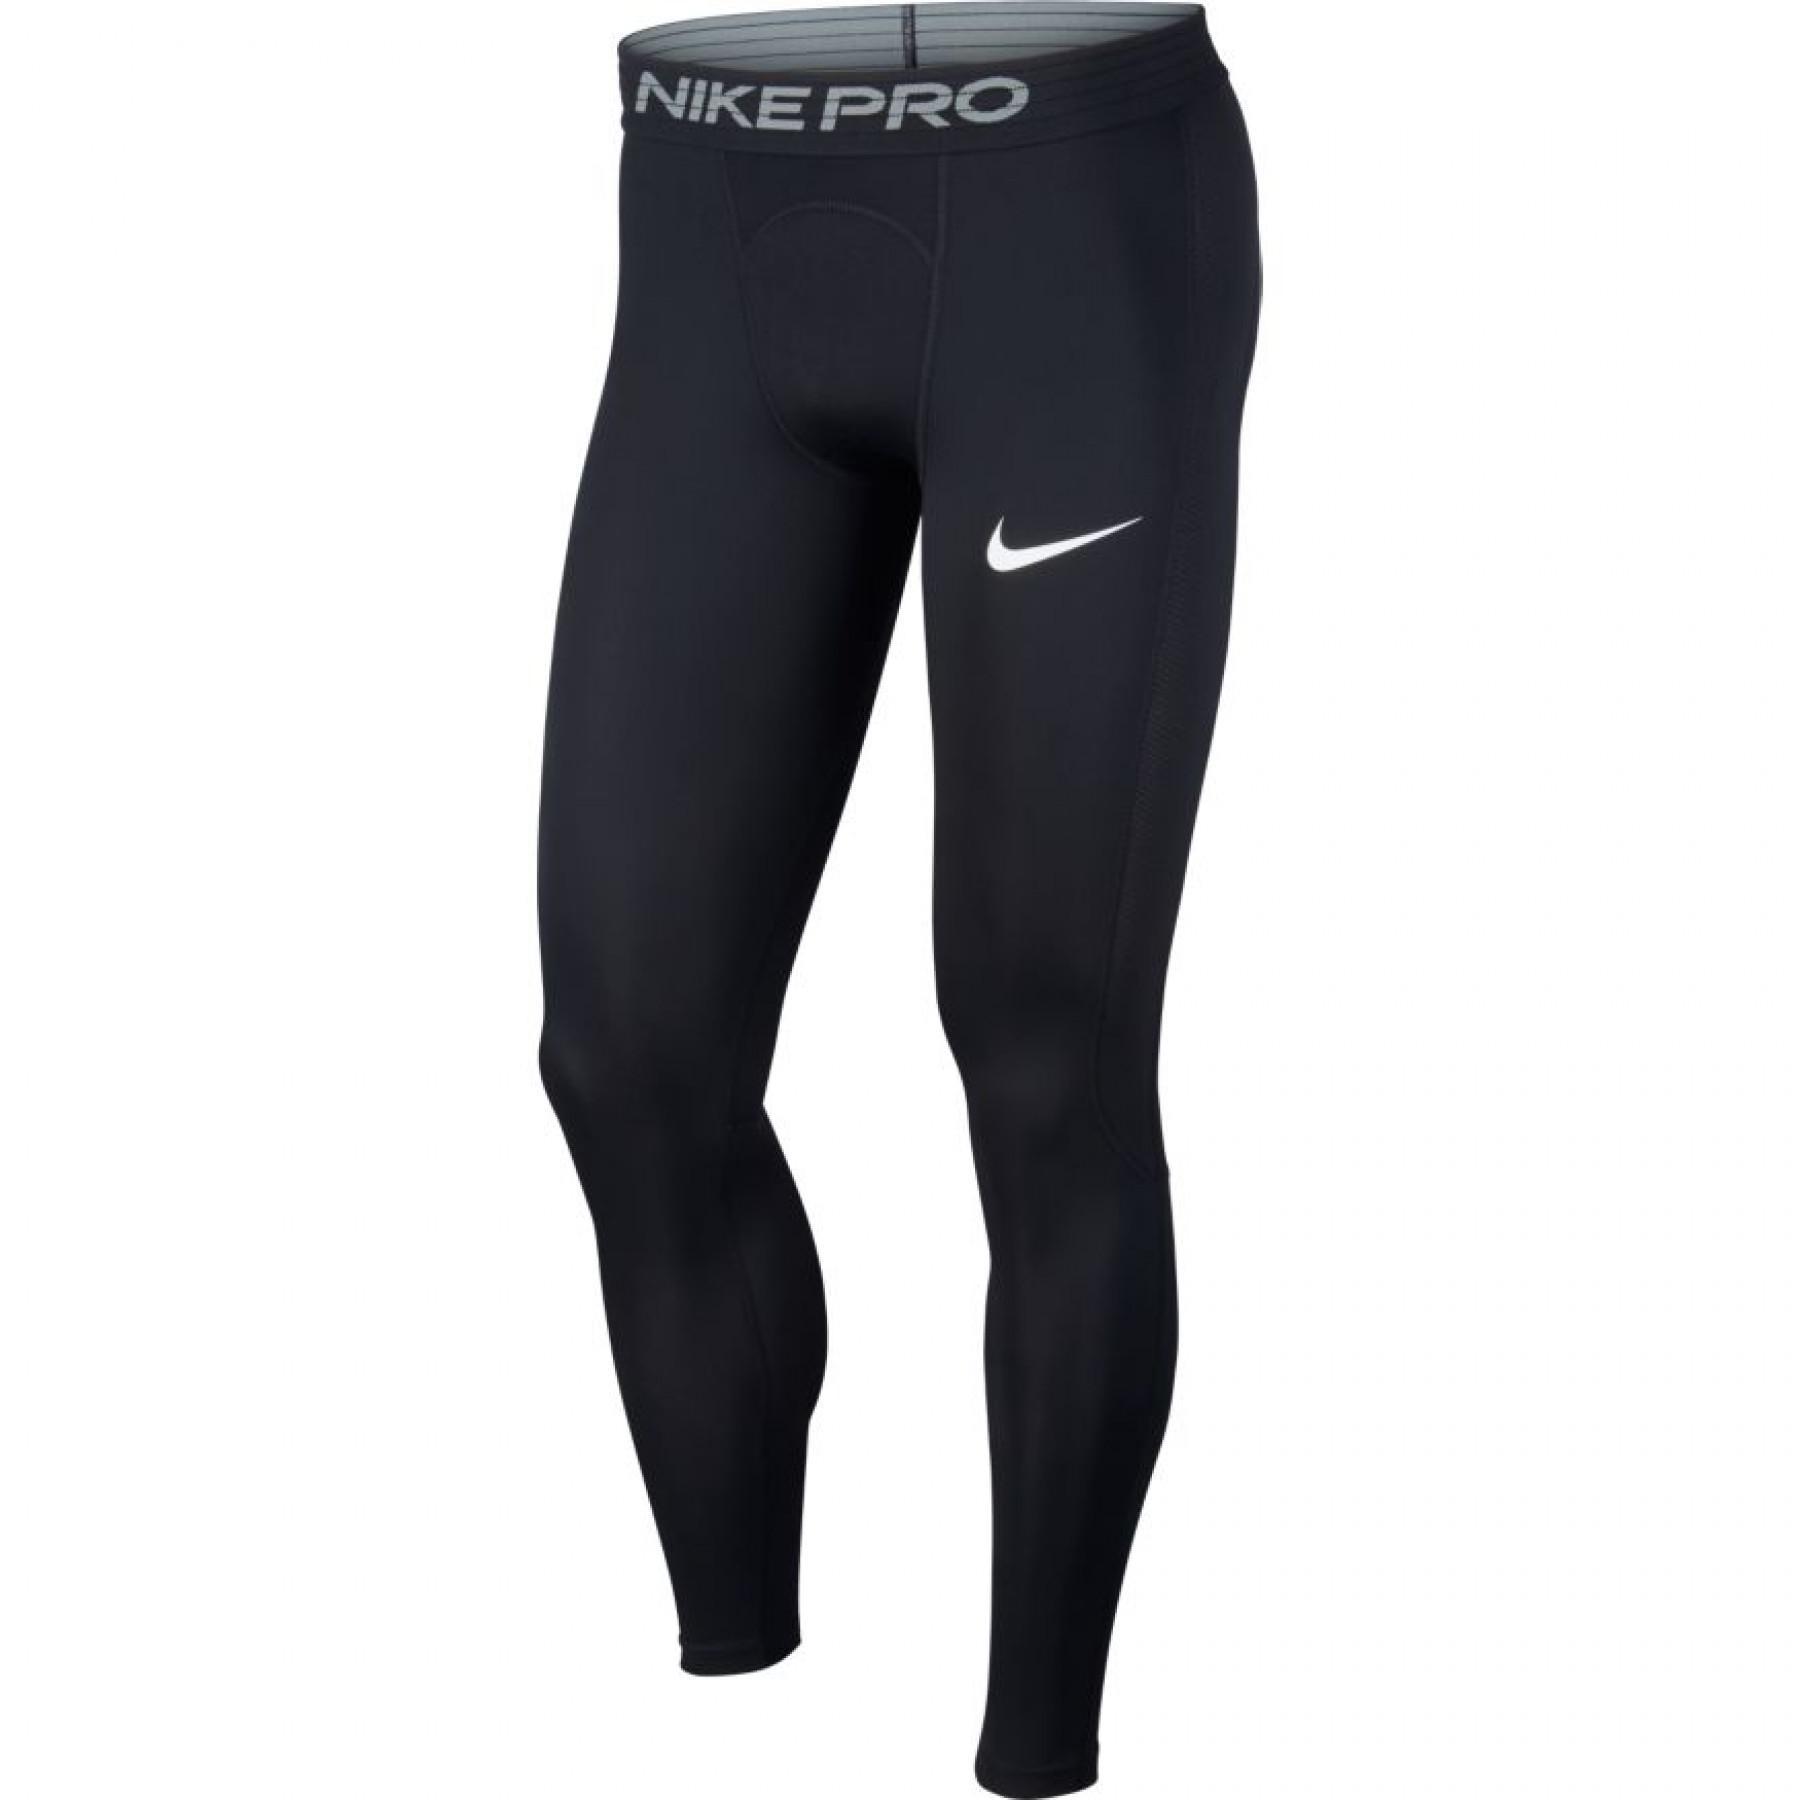 Nike Pro Compression Pants